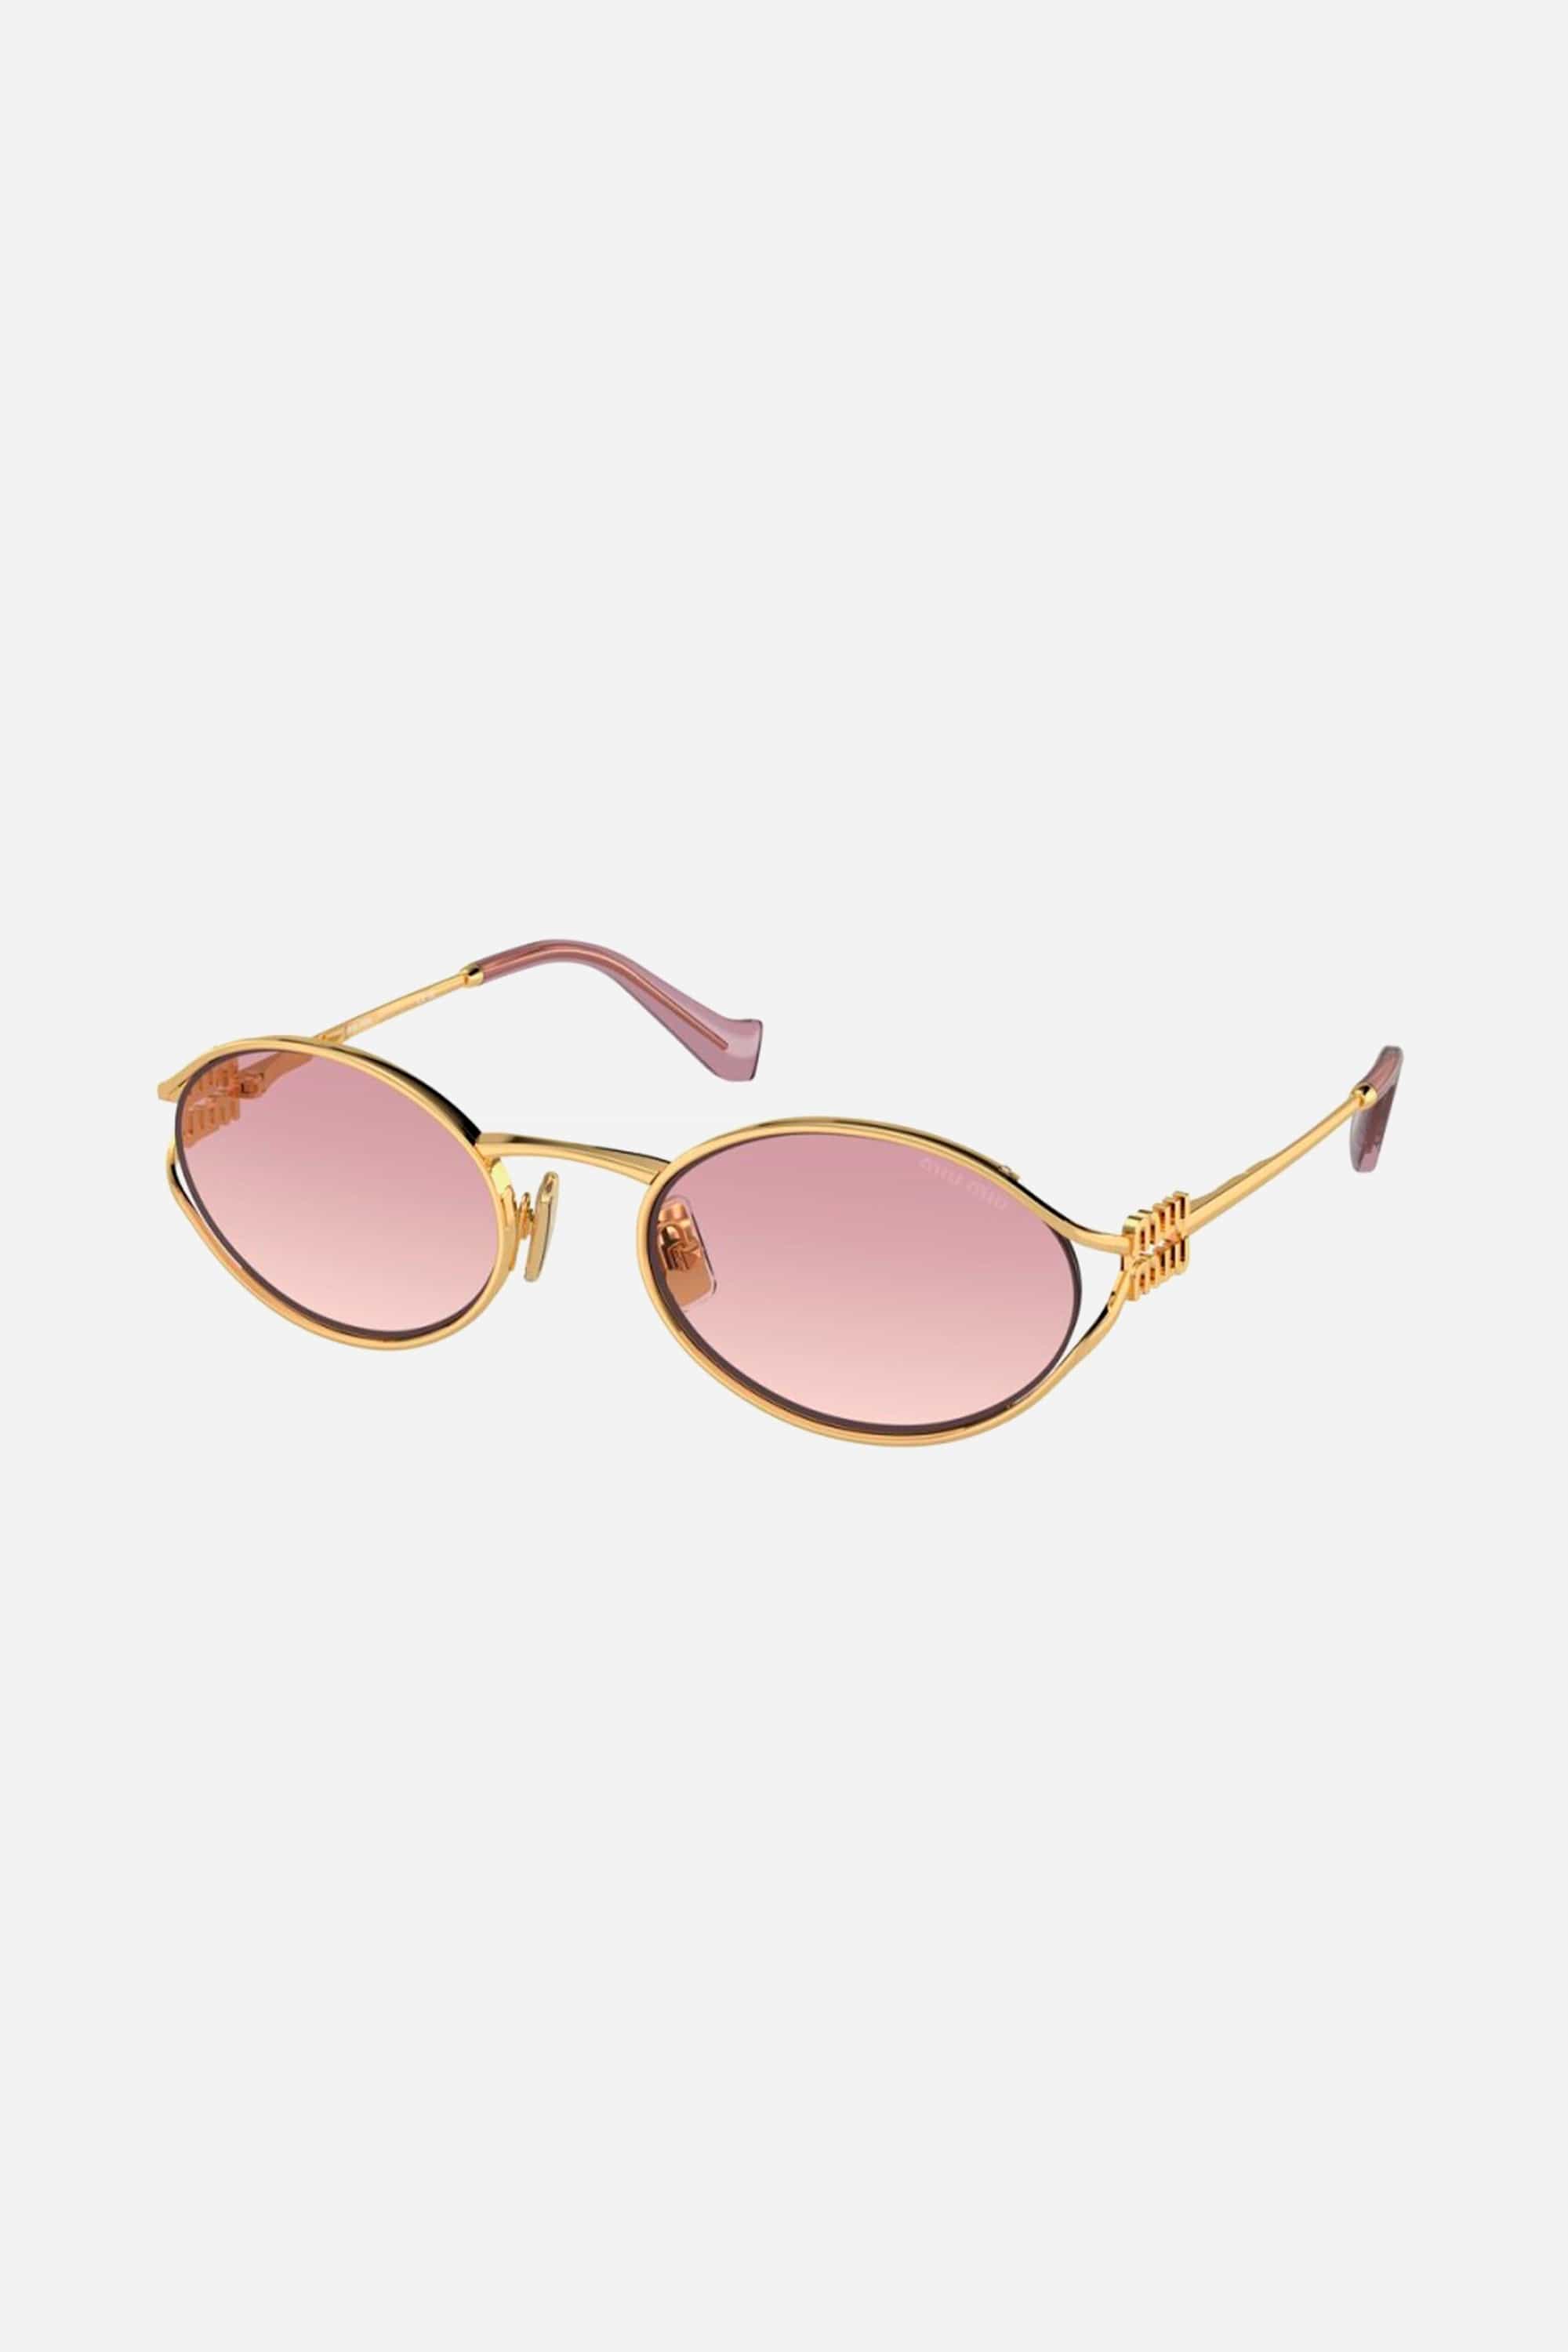 Miu Miu oval metal sunglasses with pink mirror - Eyewear Club